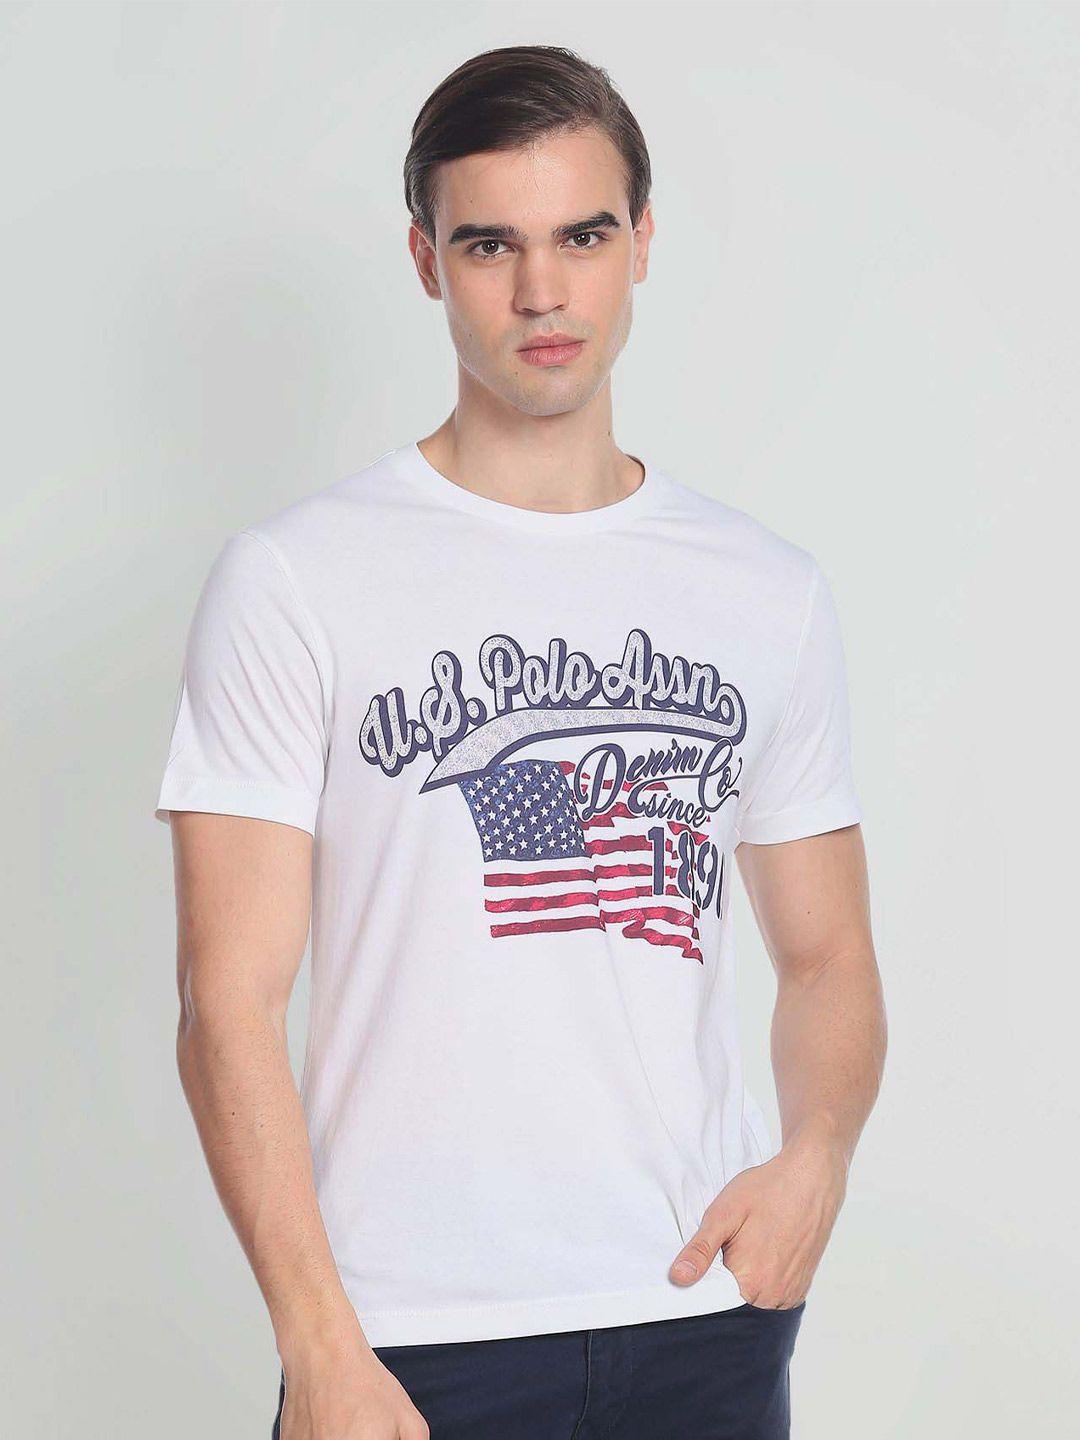 u.s. polo assn. denim co. men typography printed slim fit pure cotton t-shirt